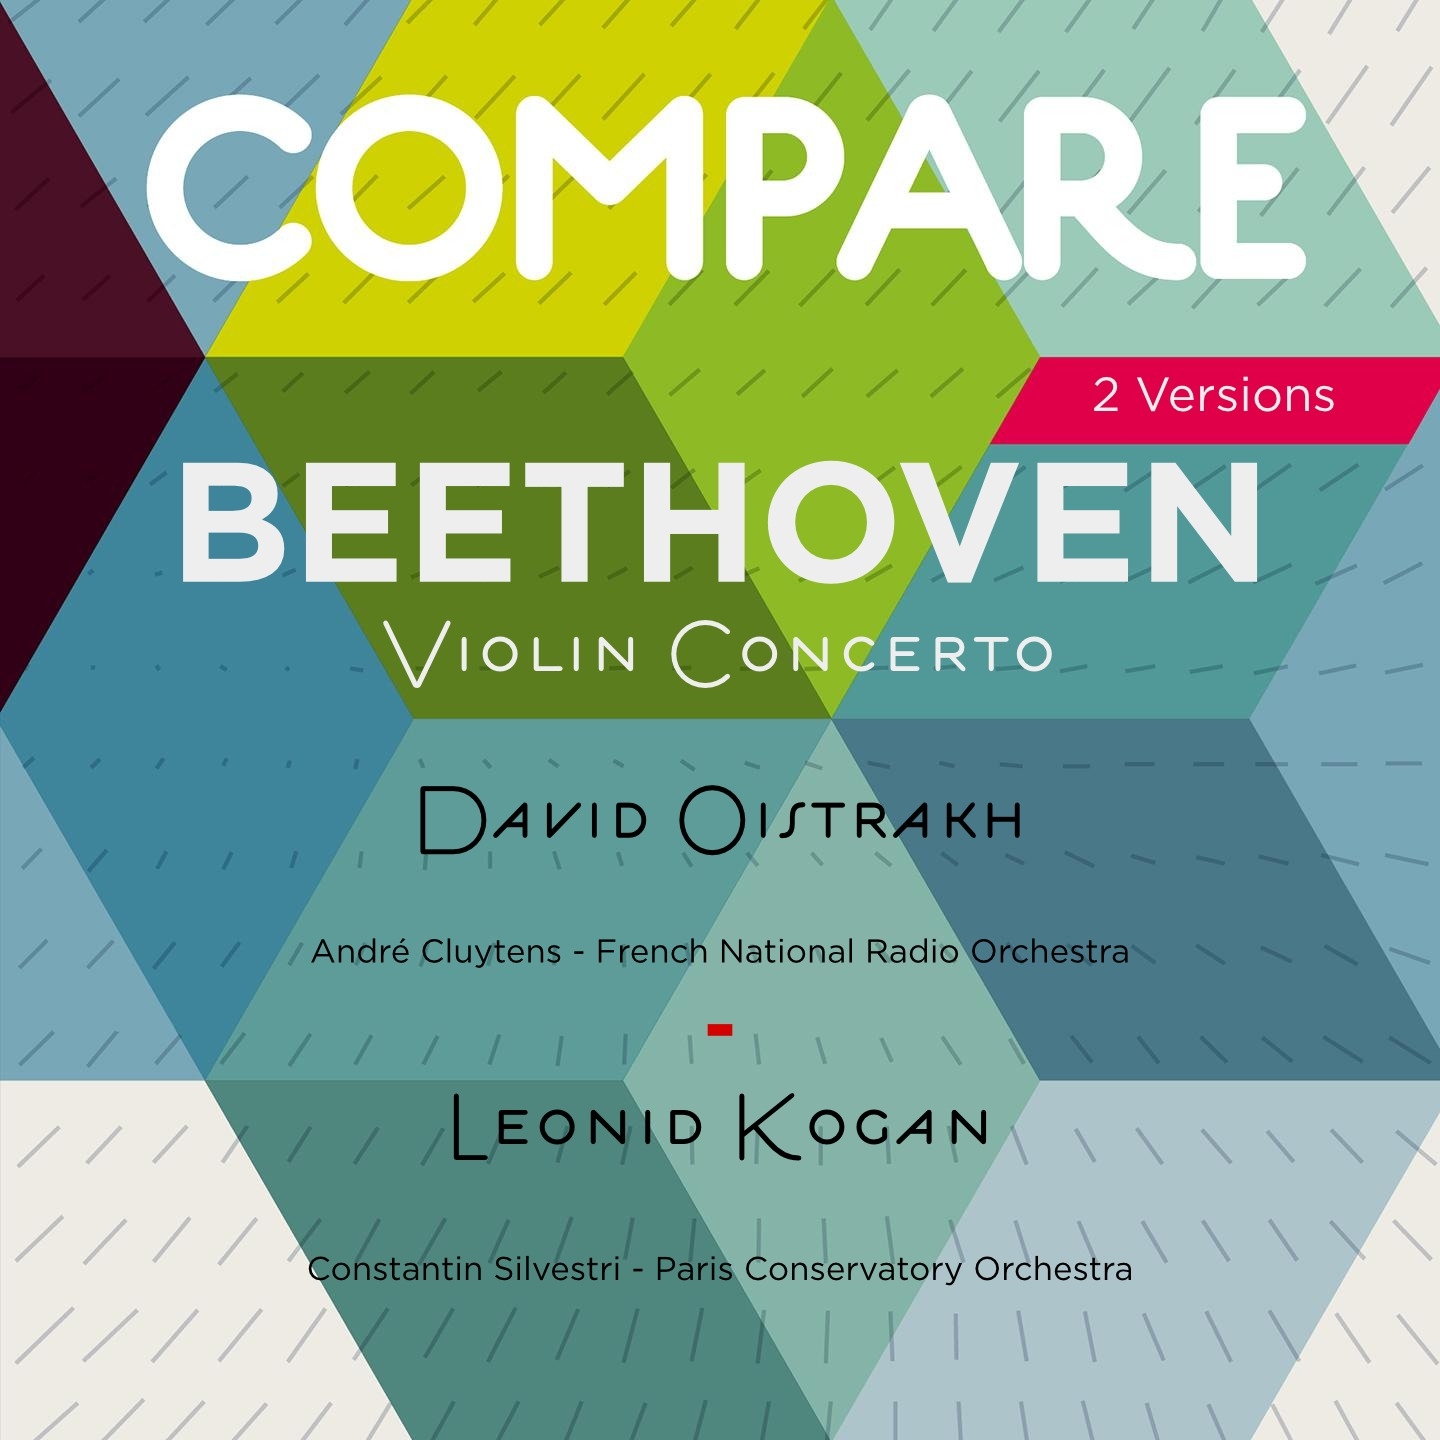 Concerto for Violin in D Major, Op. 61: III. Rondo - Allegro